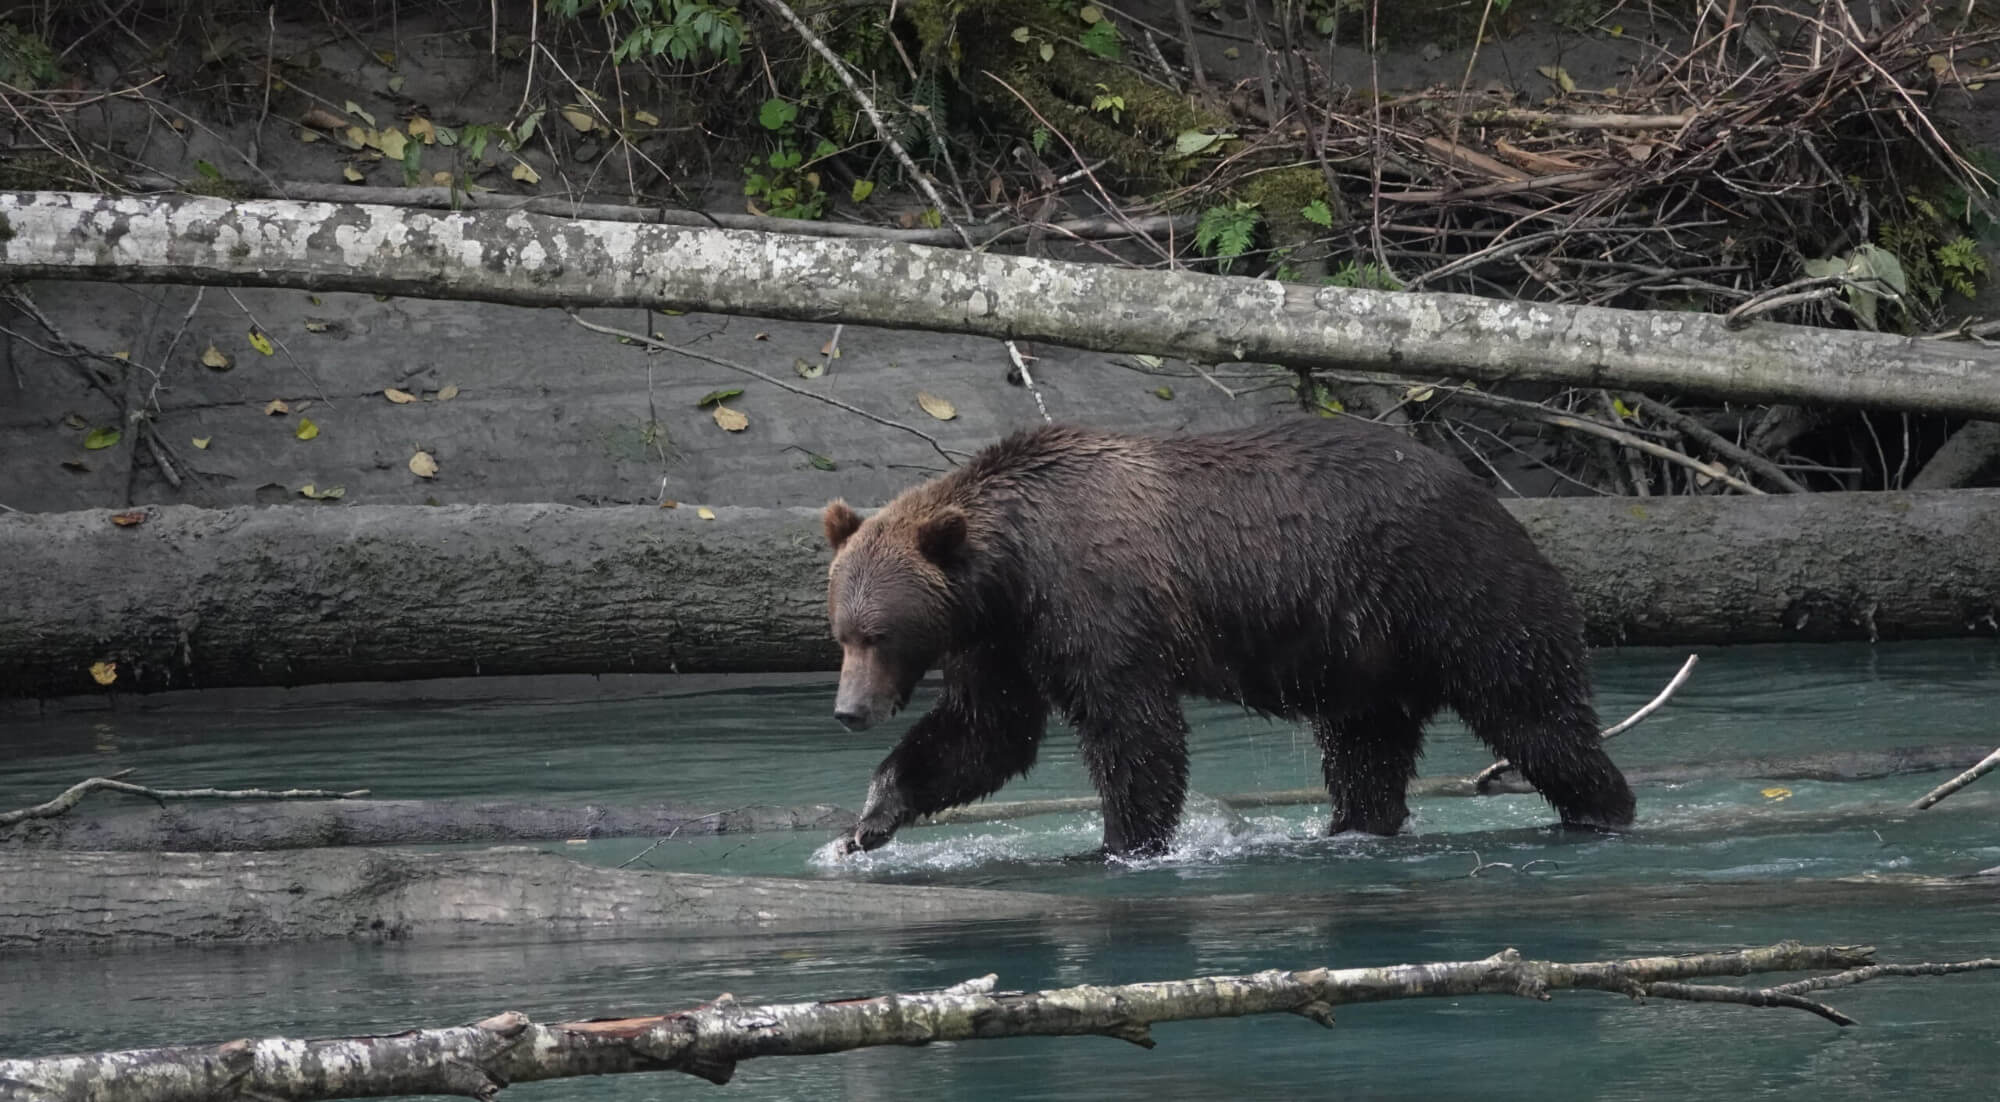 Grizzly Bear walking in shallow water in between fallen trees